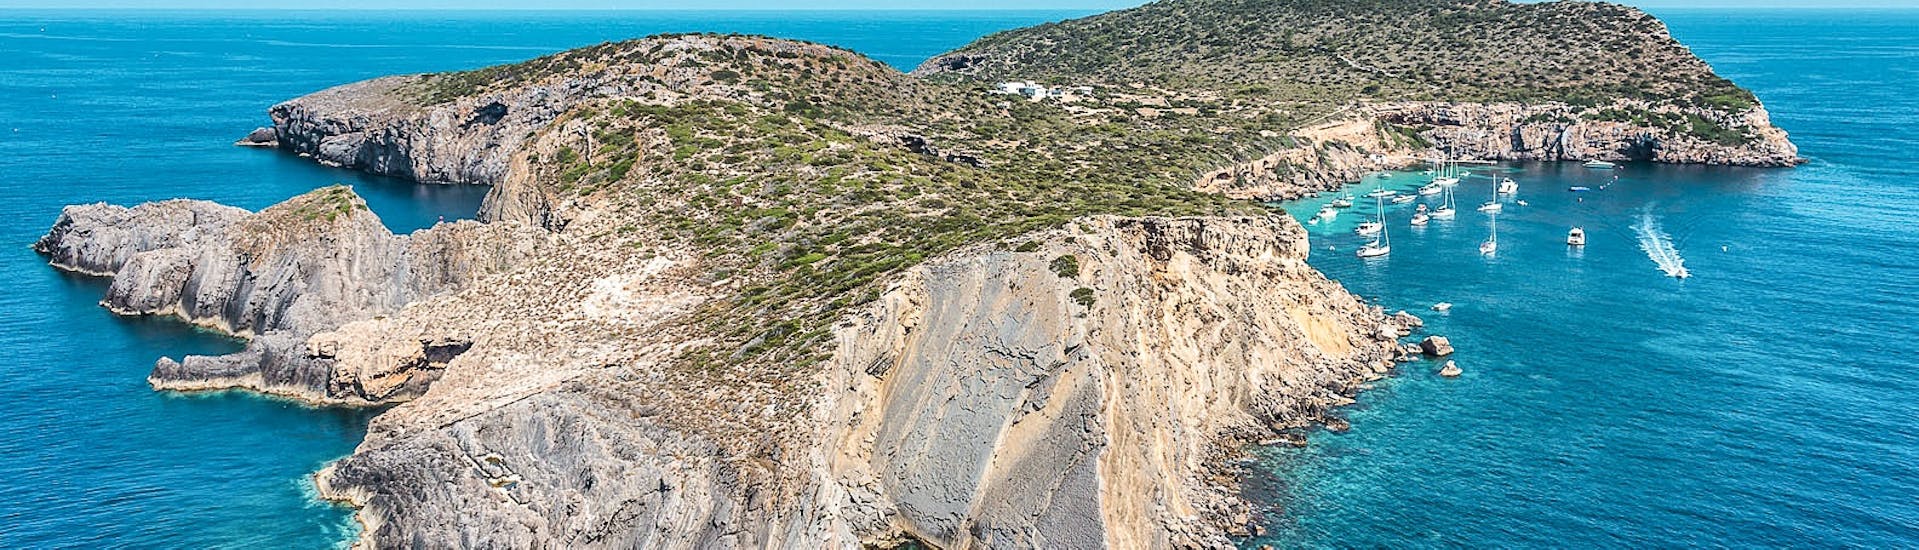 Aerial view of Tagomago Island during a Jet Ski Safari from Ibiza to Cala Llonga, with Enjoy Watersports Ibiza.